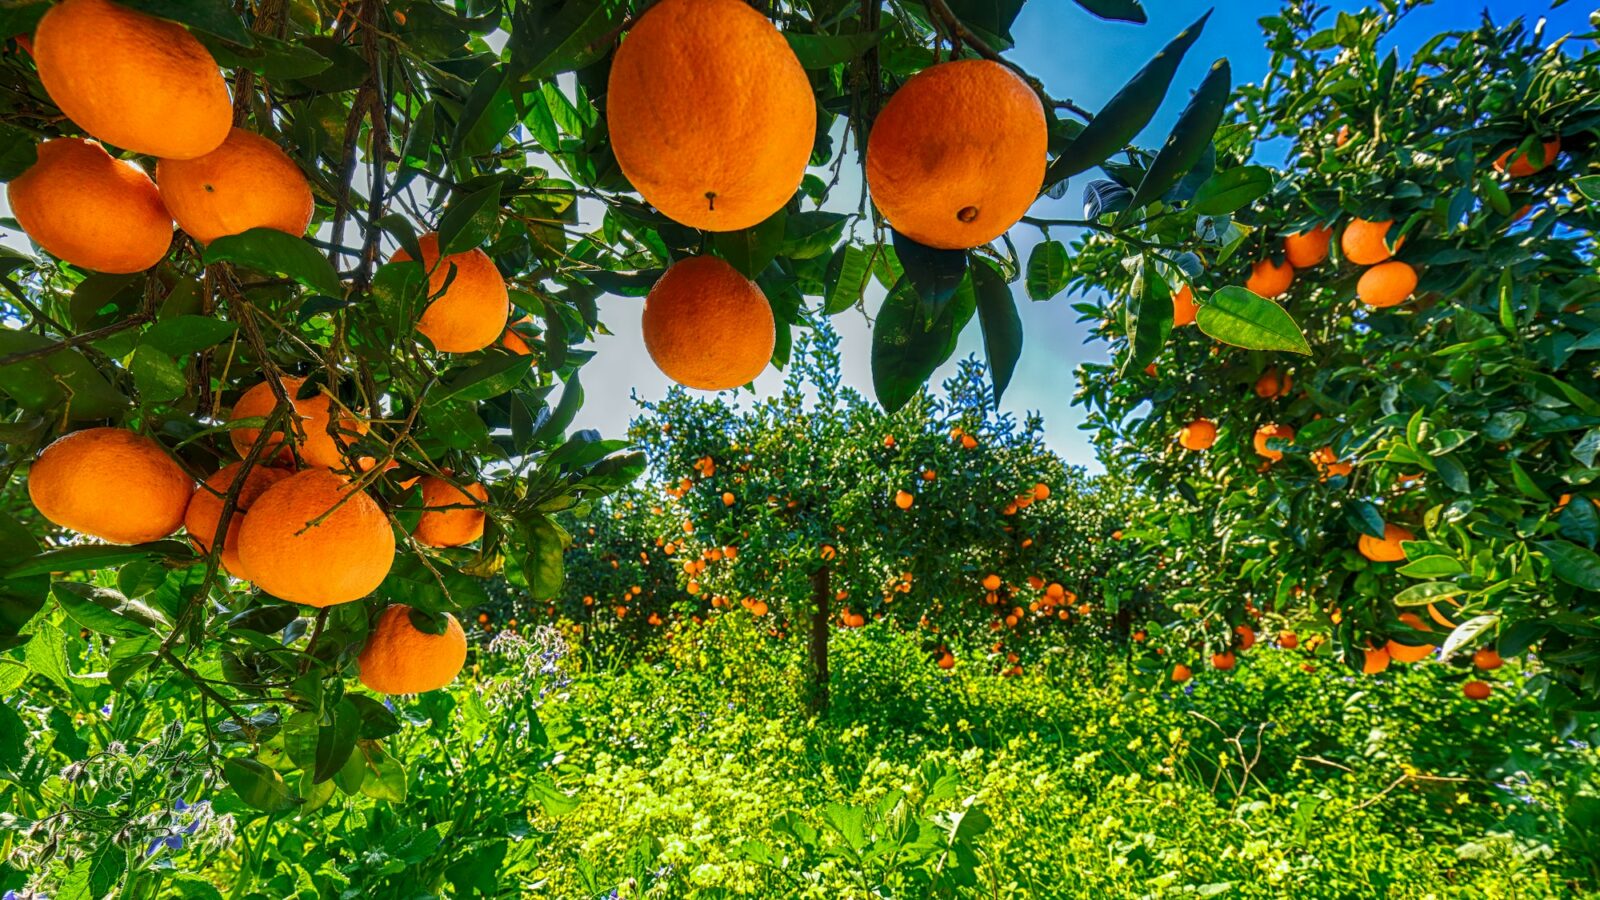 Ripe oranges on tree in orange garden.